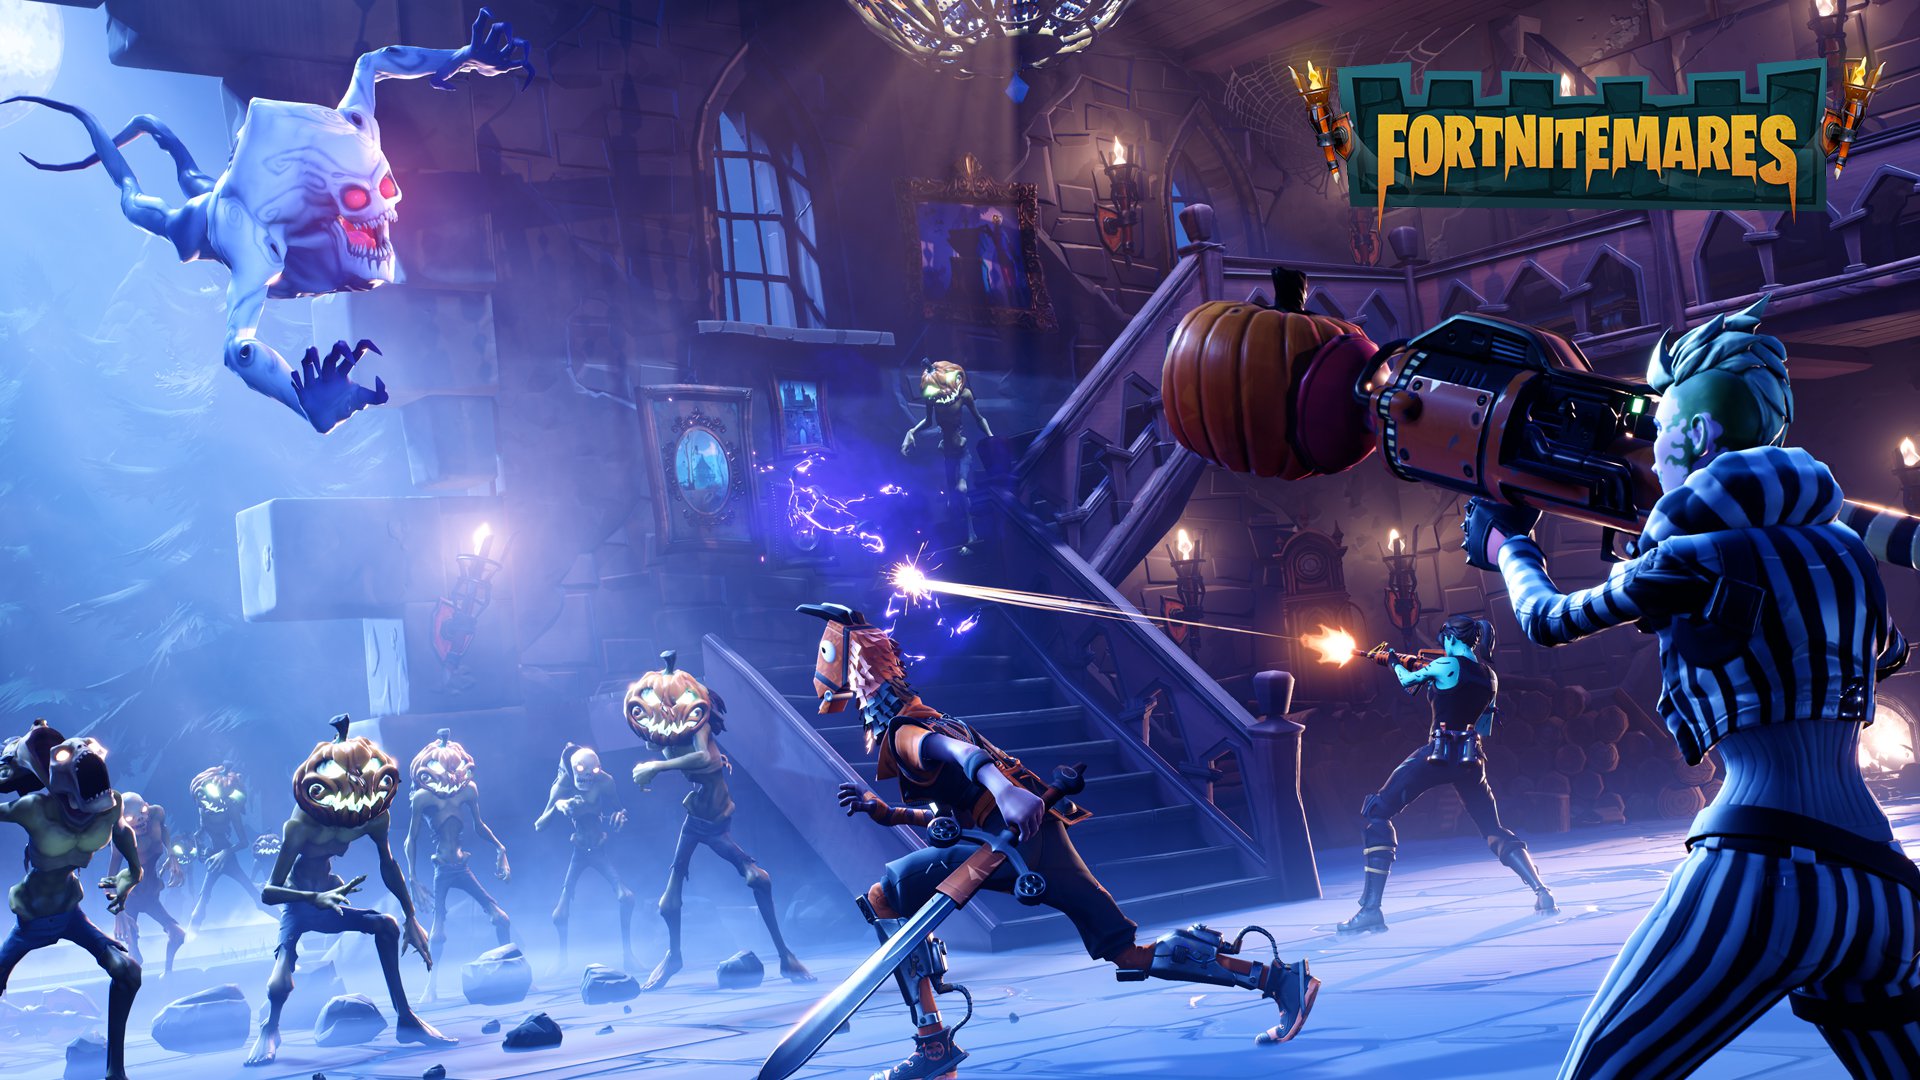 Fortnite Halloween Update Brings Festivities And Gameplay Battle